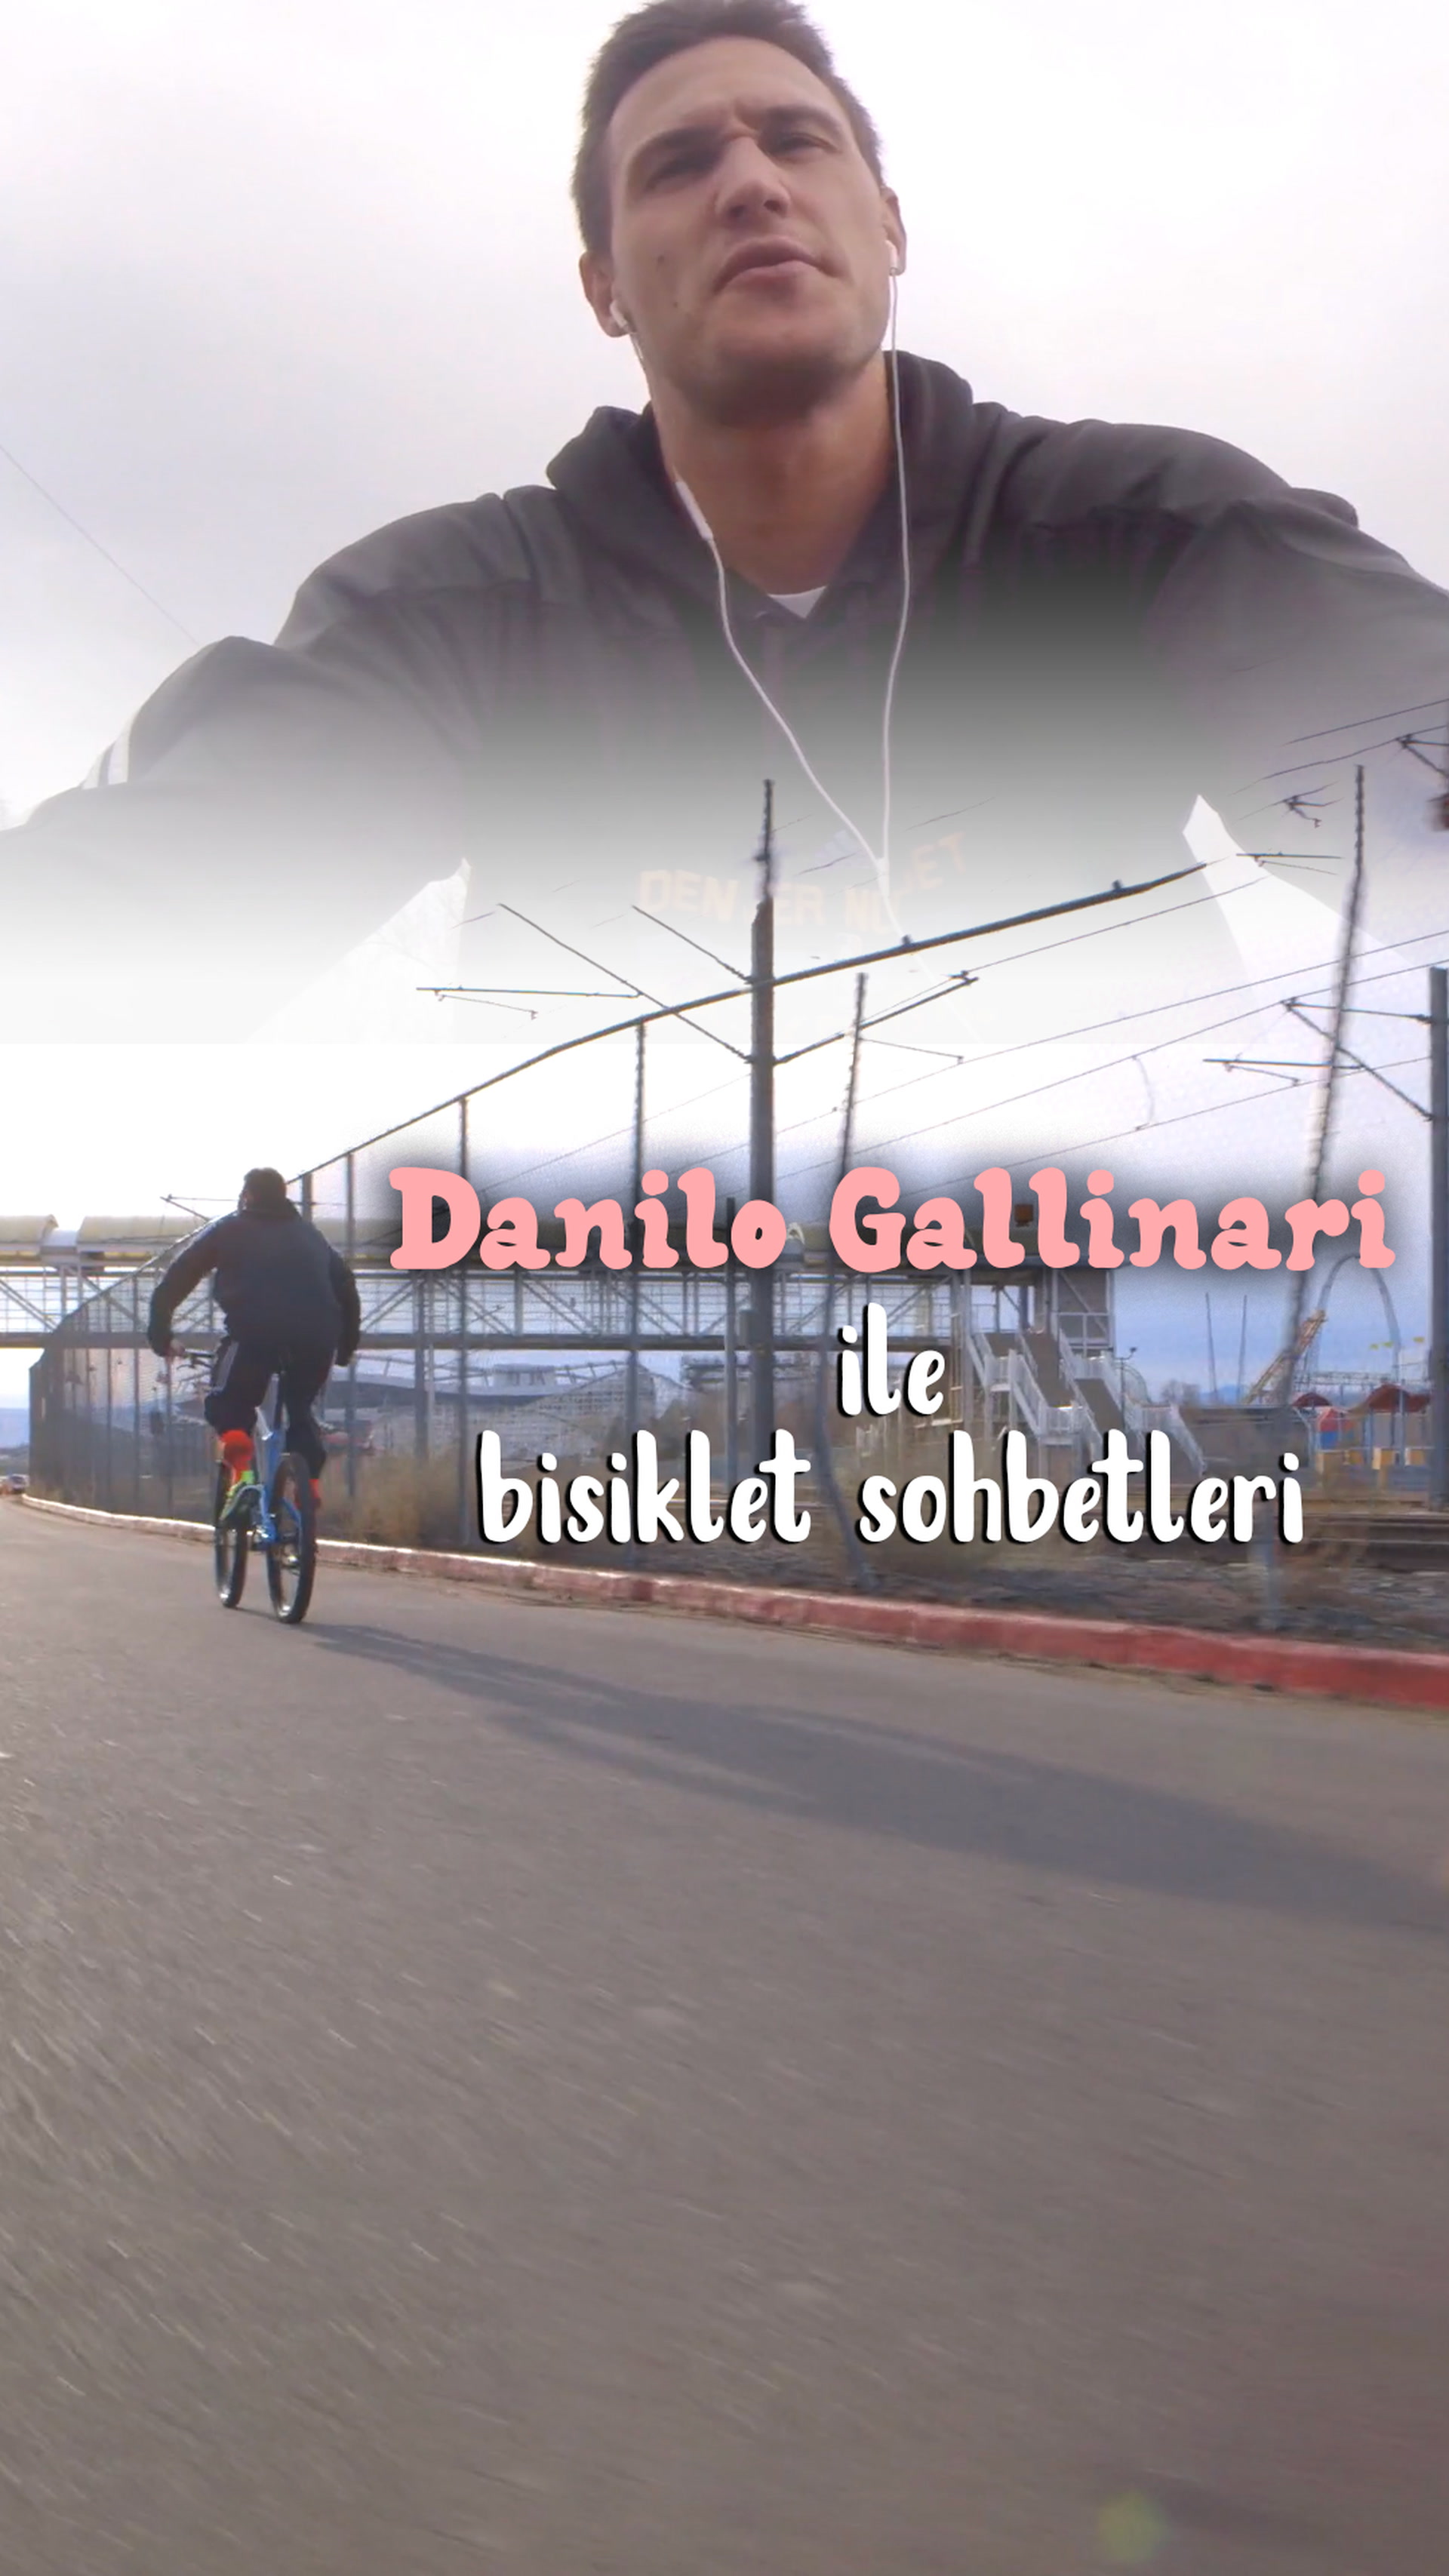 Danilo Gallinari ile bisiklet sohbeti 